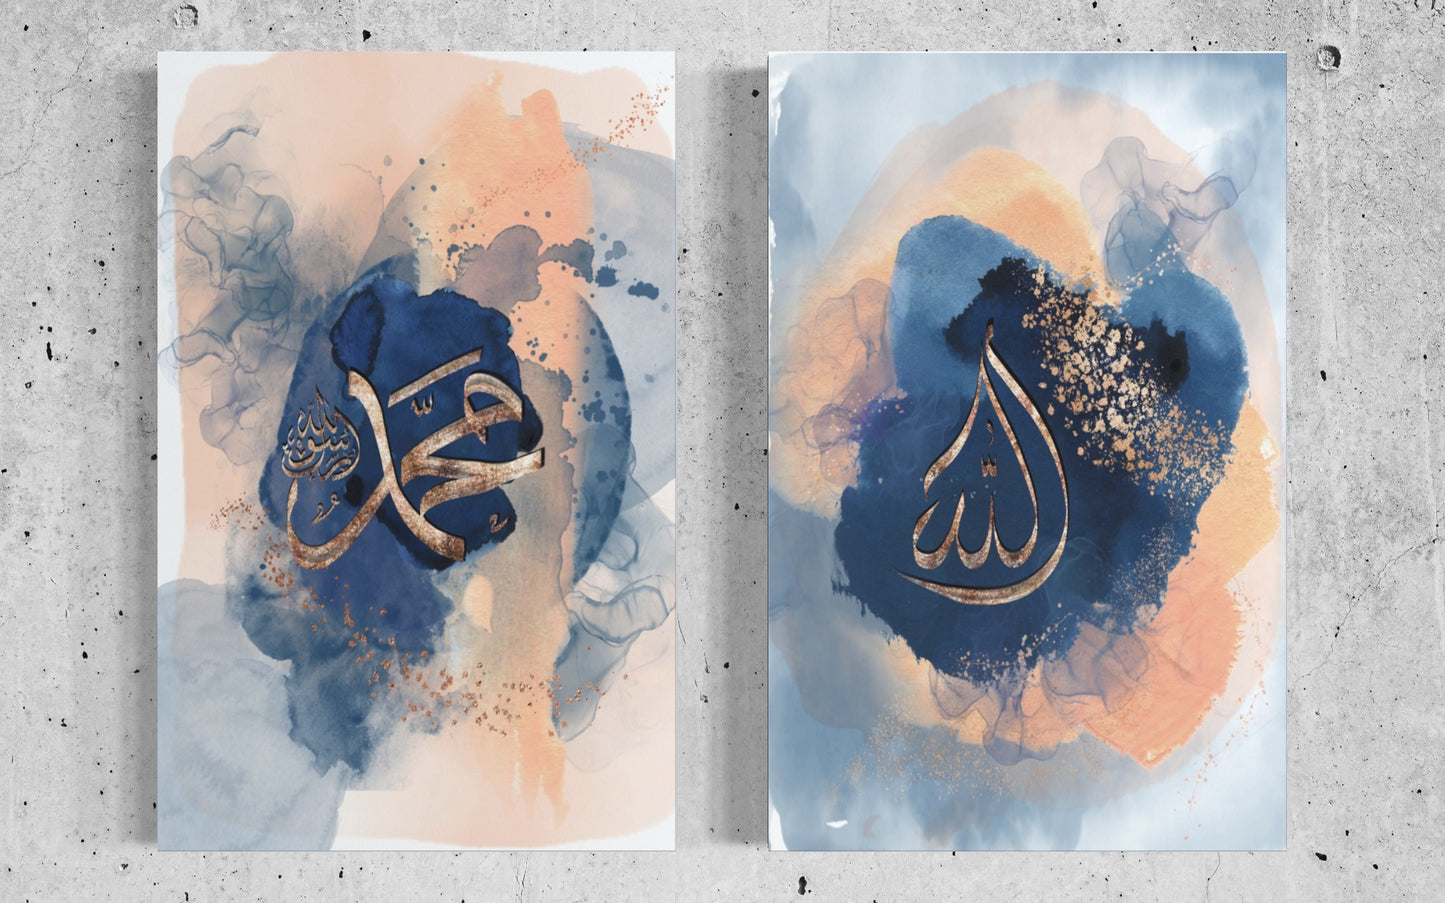 Muhammad (saw) “Blushing Blues” Islamic Art